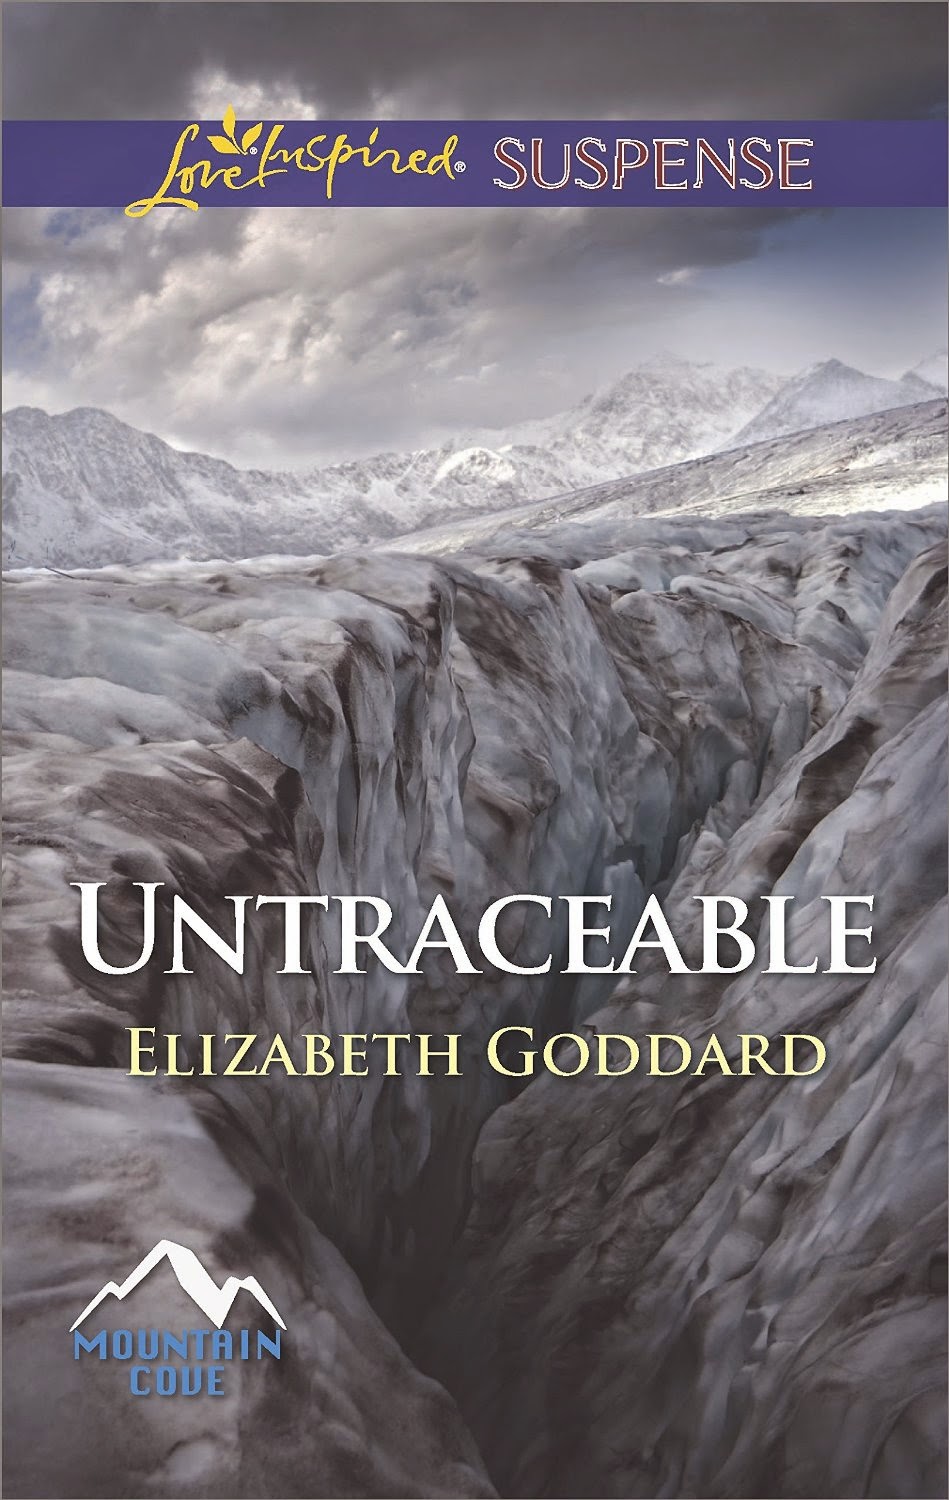 Untraceable by Elizabeth Goddard